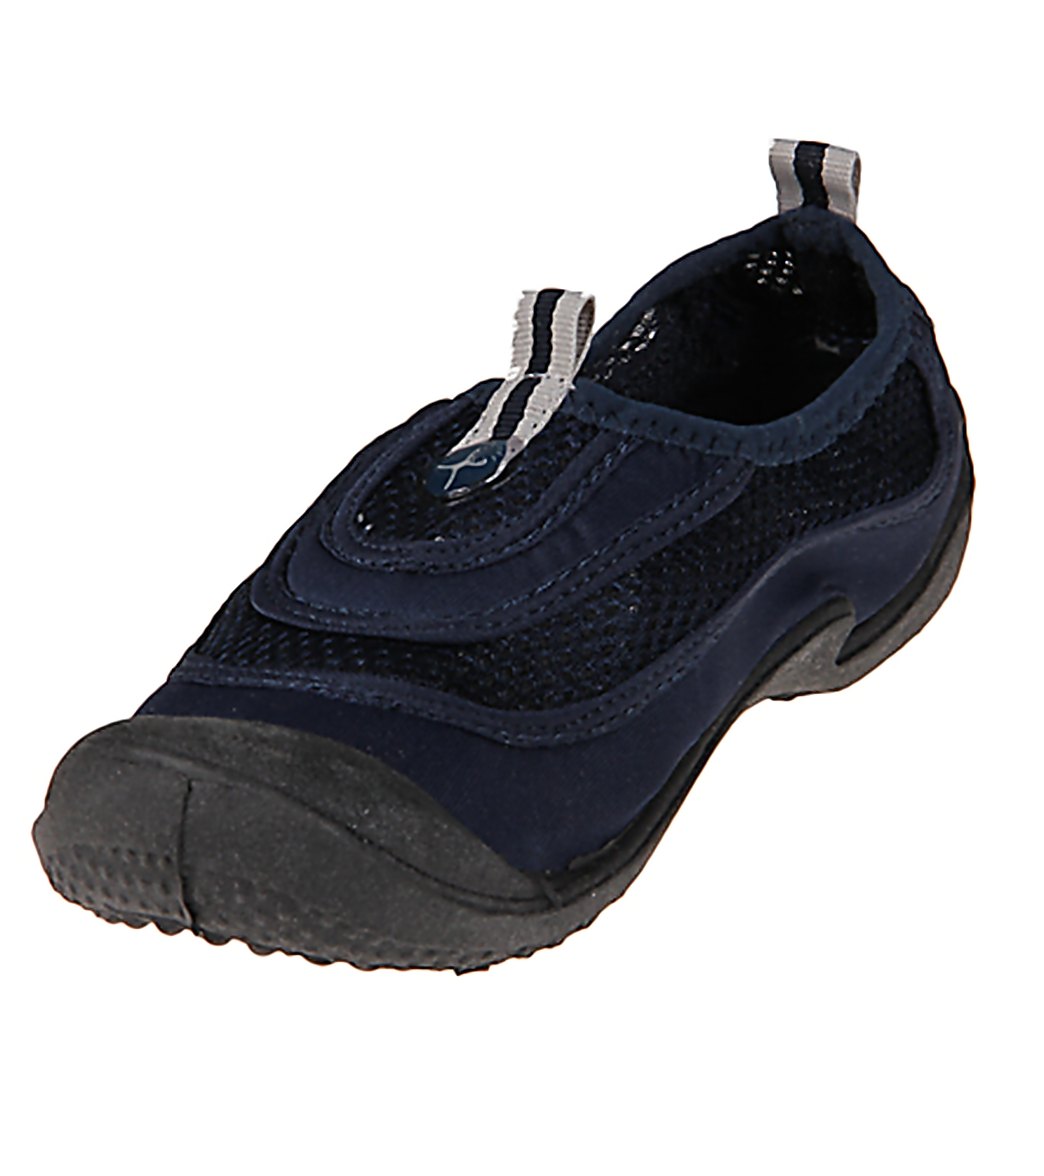 cudas water shoes